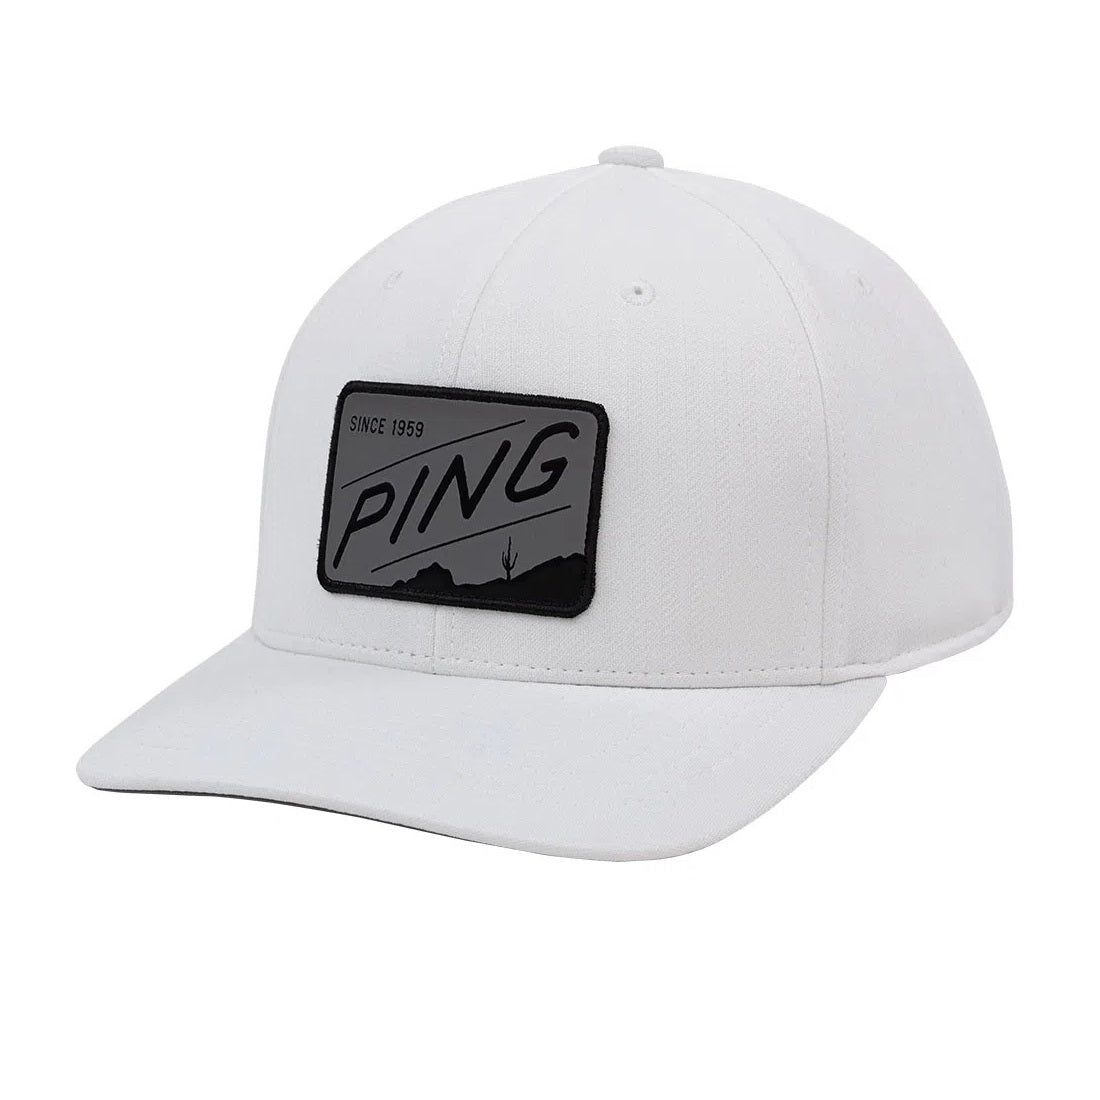 Ping PP58 Camelback Snapback Hat